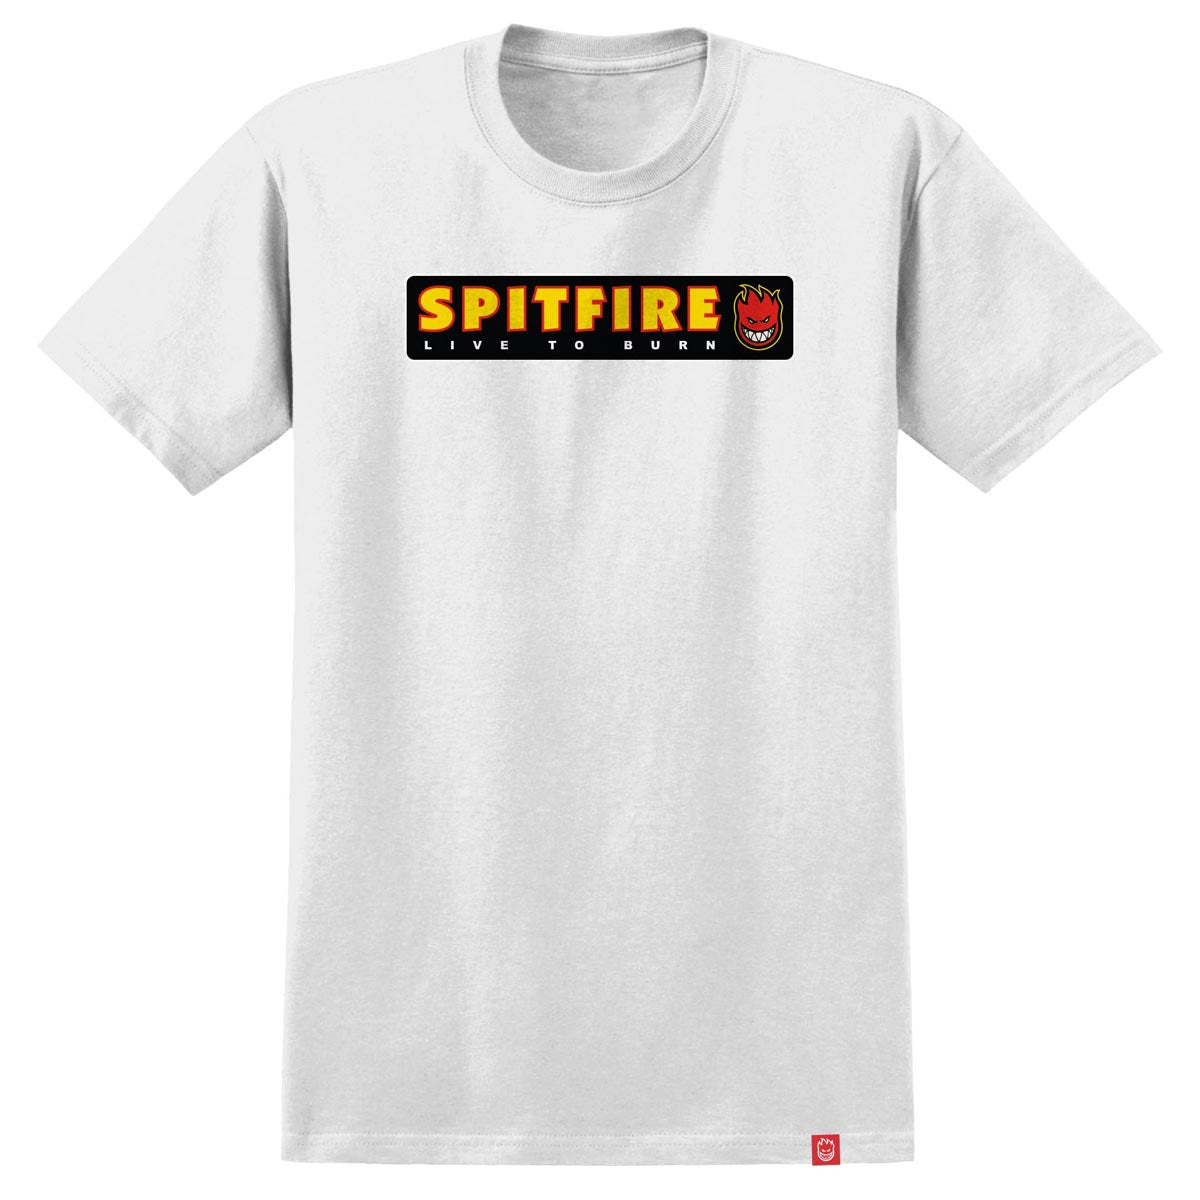 Spitfire Ltb T-Shirt - White/Multi Color image 1